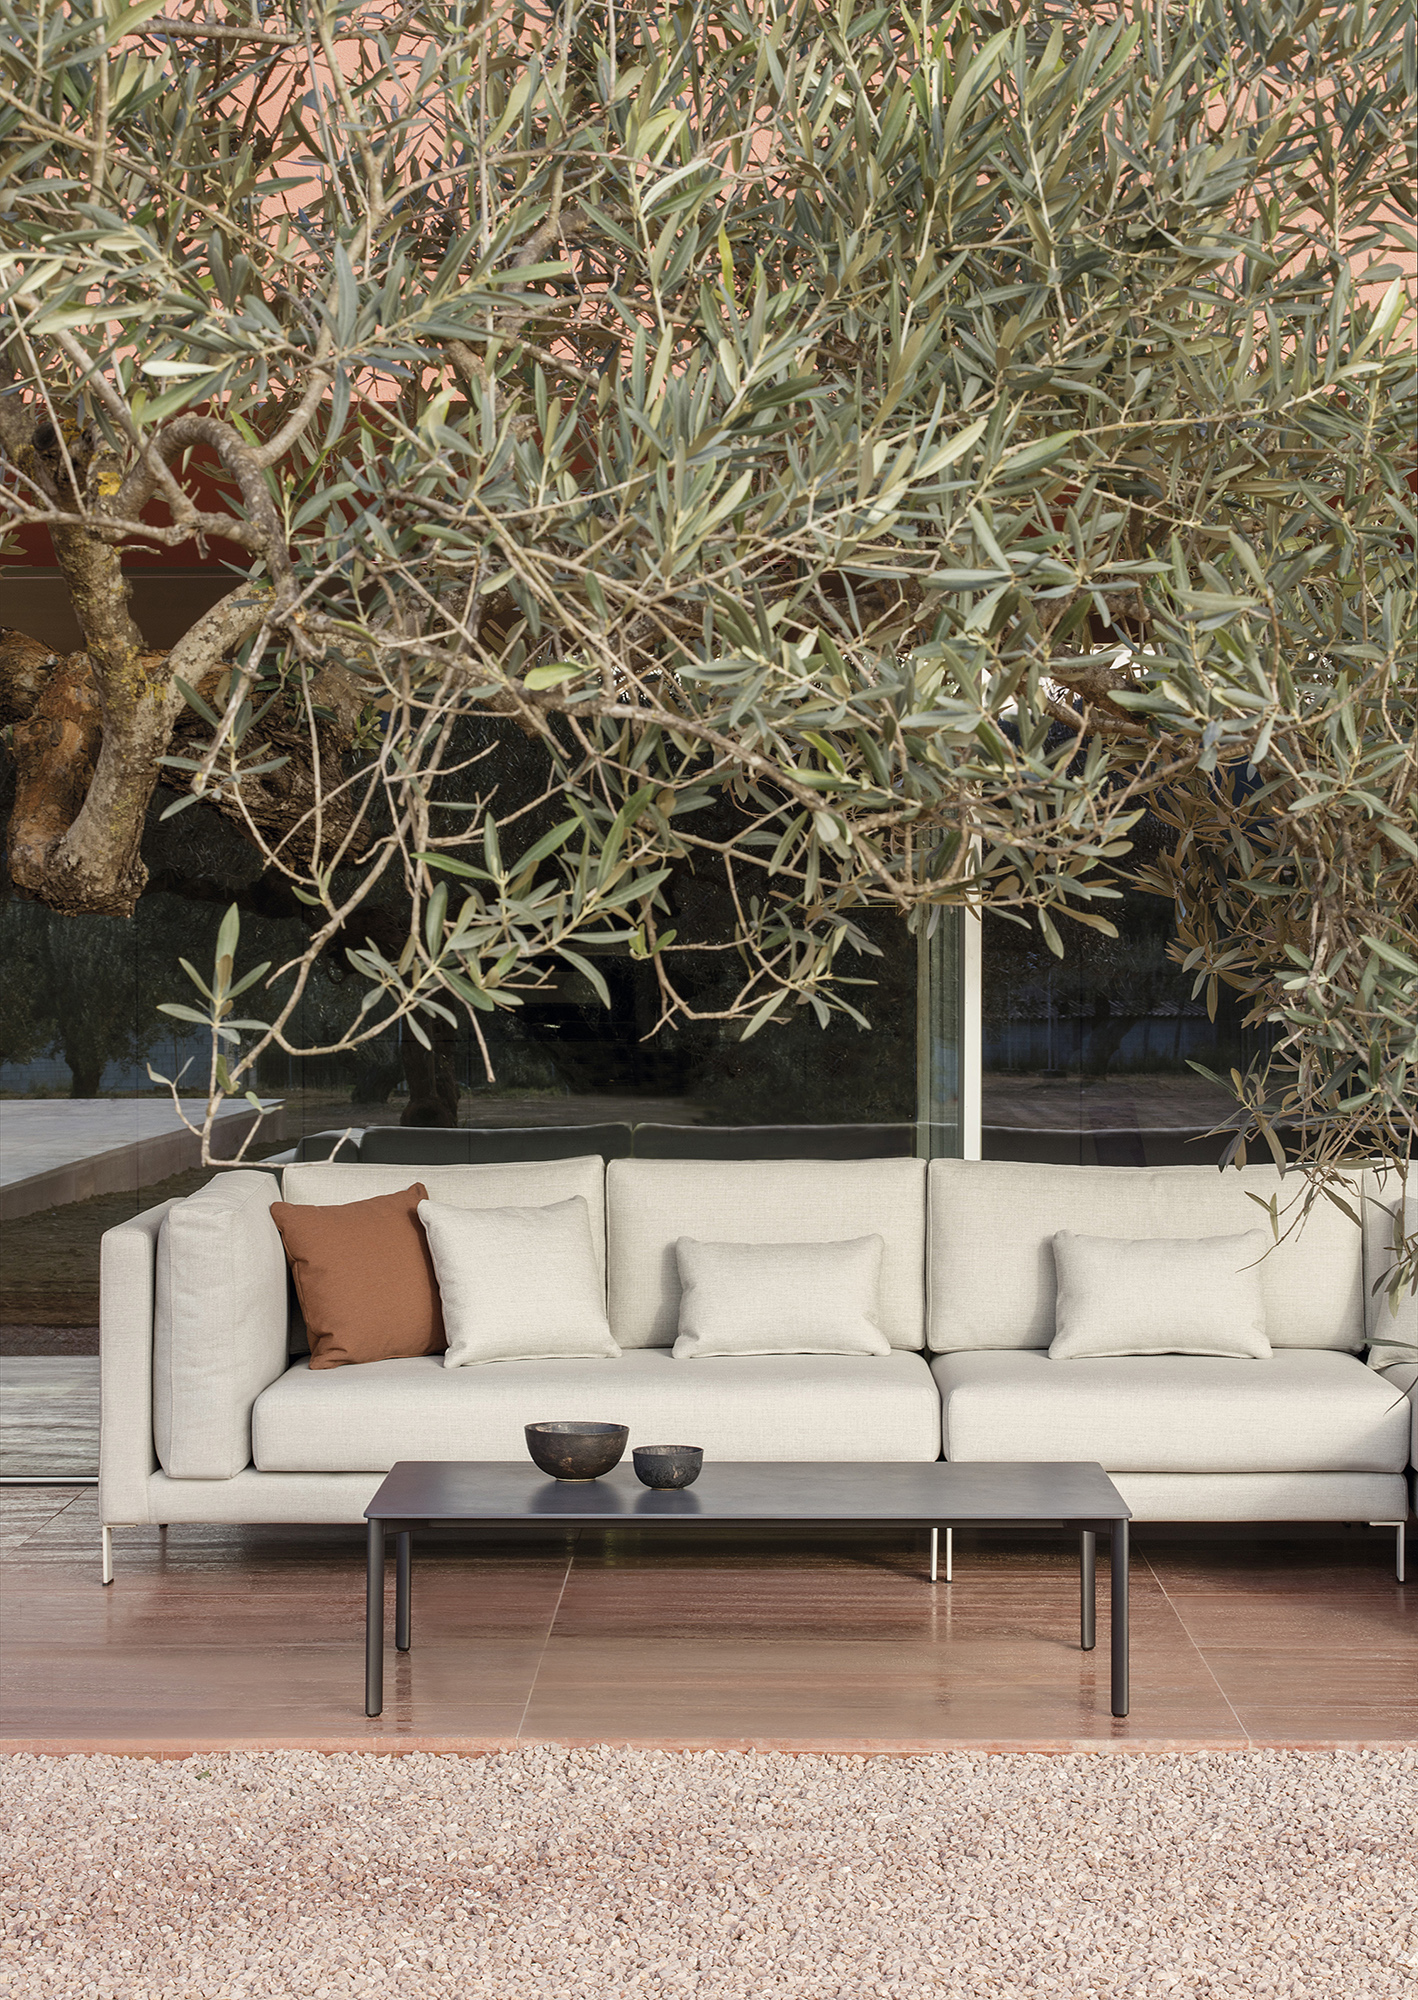 outdoor kollektion - sofas - linkes modul slim